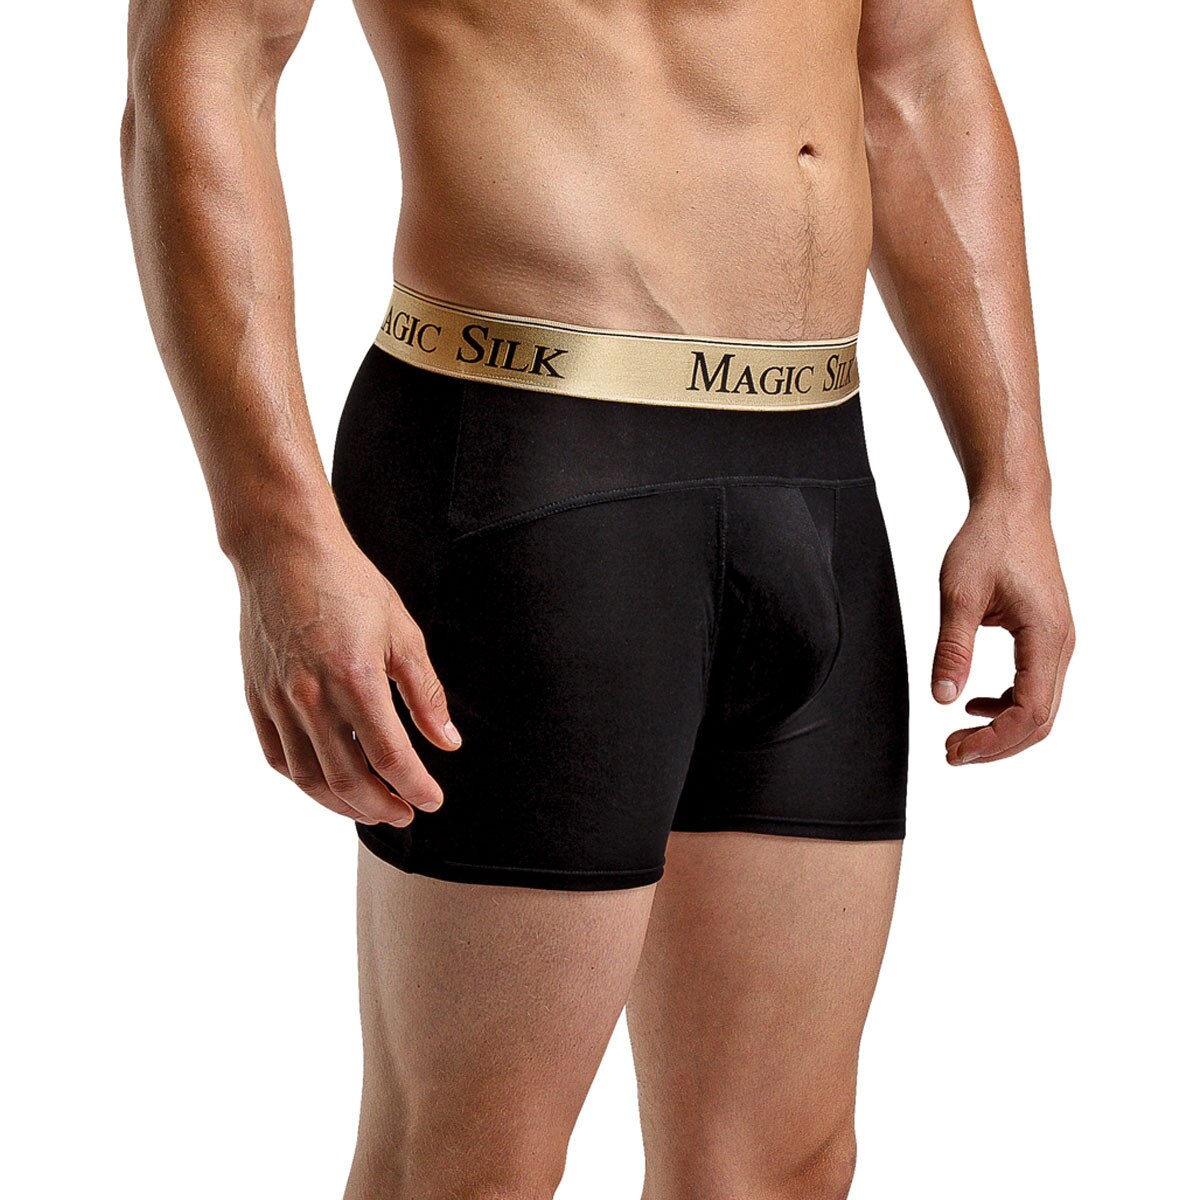 SALE - Mens Magic Silk 100% Silk Knit Boxer Shorts Black